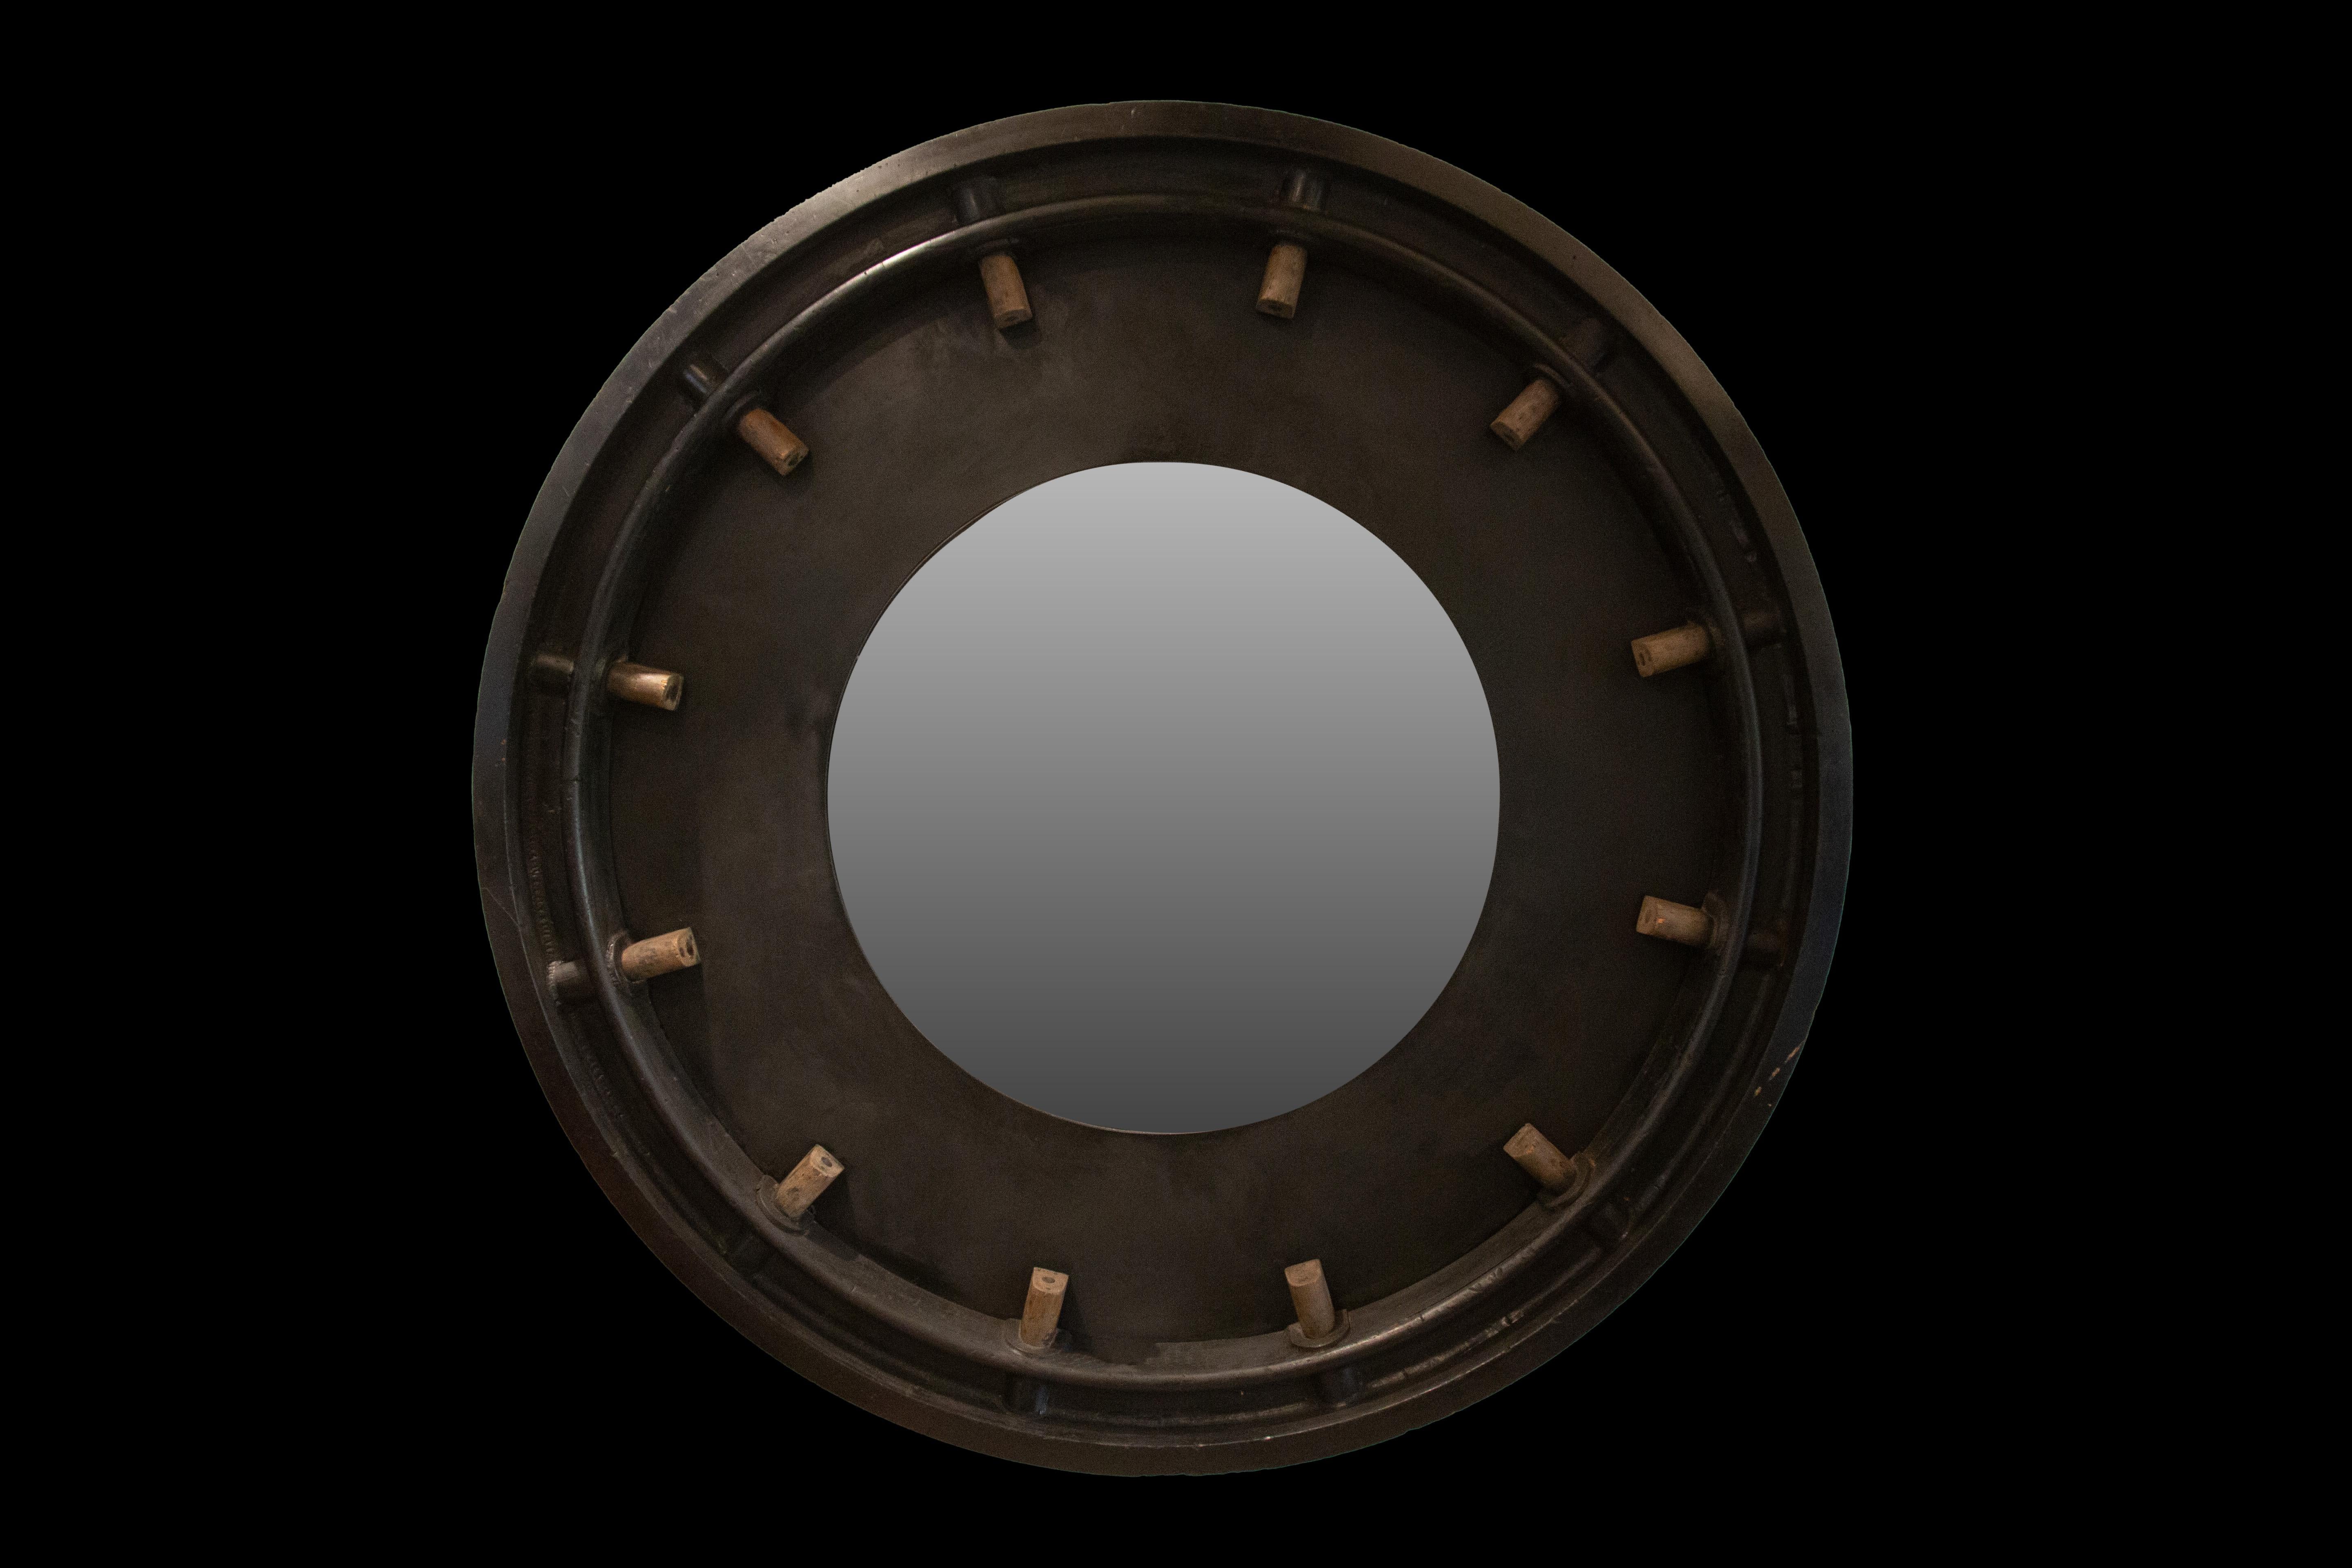 Massive Industrial Internal Gear convex mirror:

Measures: 57